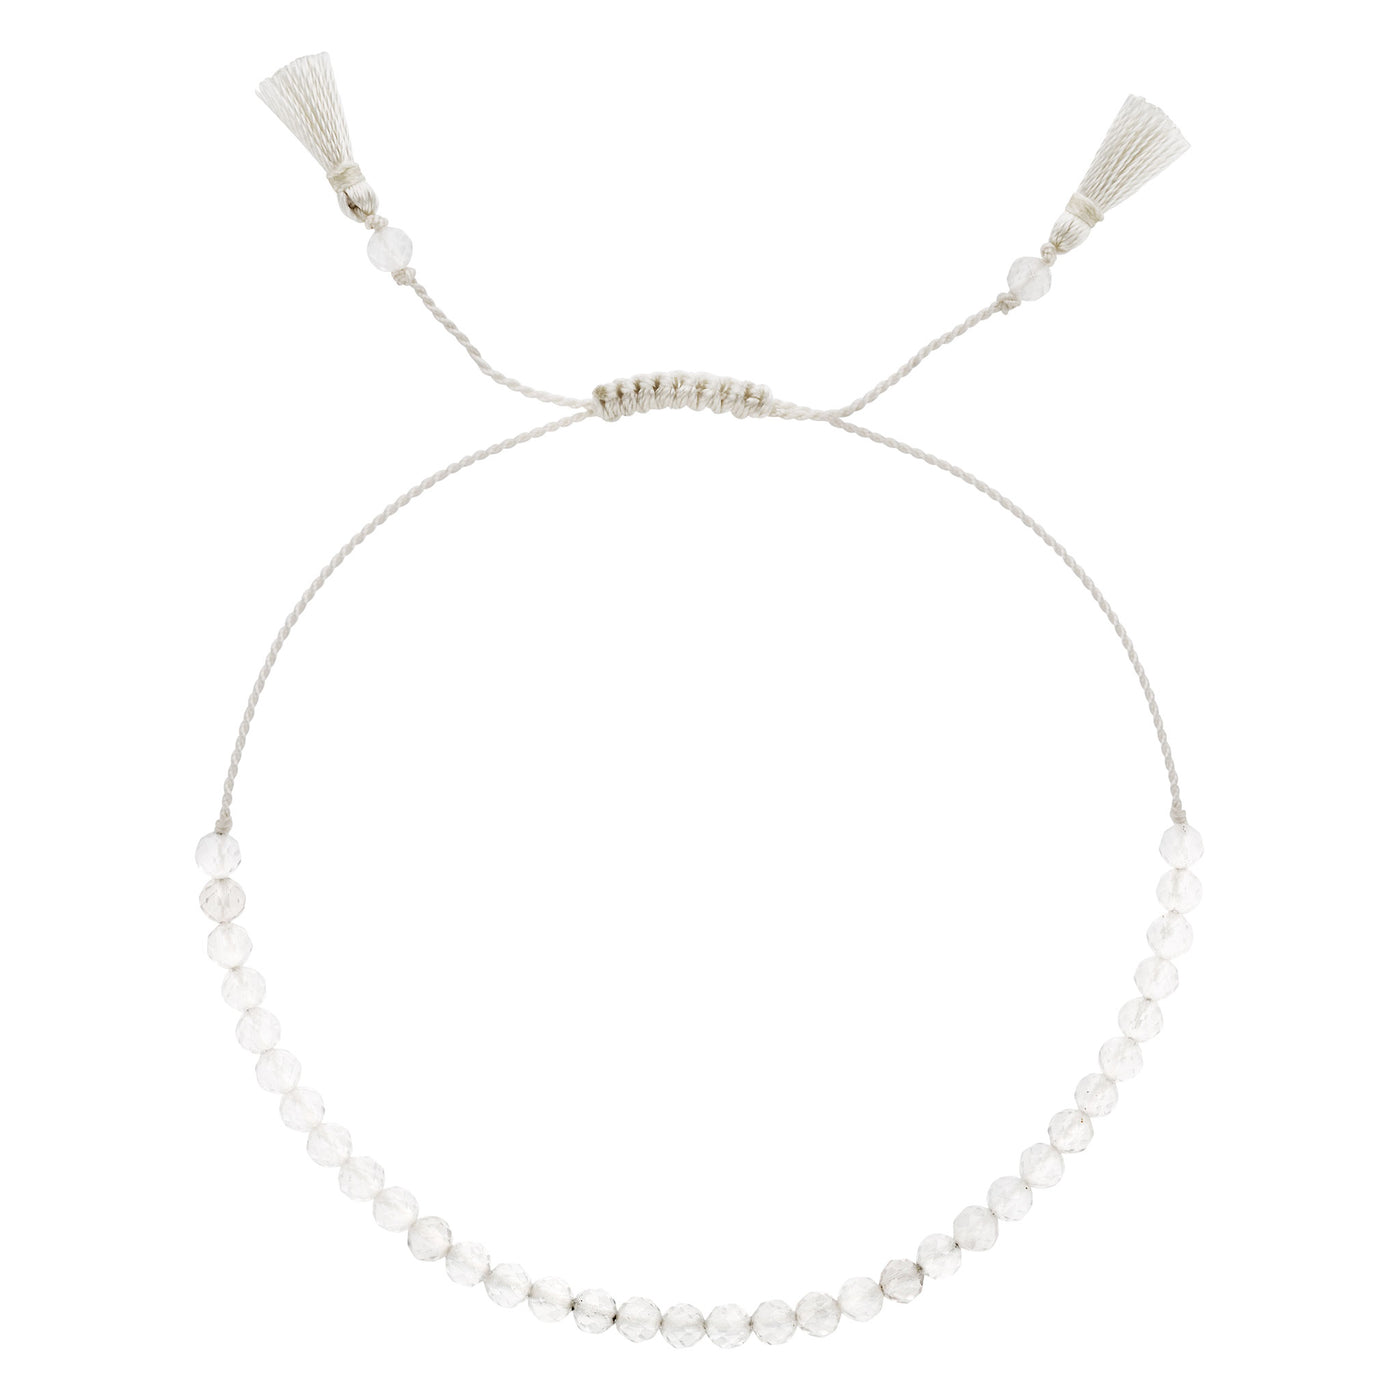 APRIL Birthstone: Crystal Quartz Women's Delicate Faceted Mini Tassel Bracelet